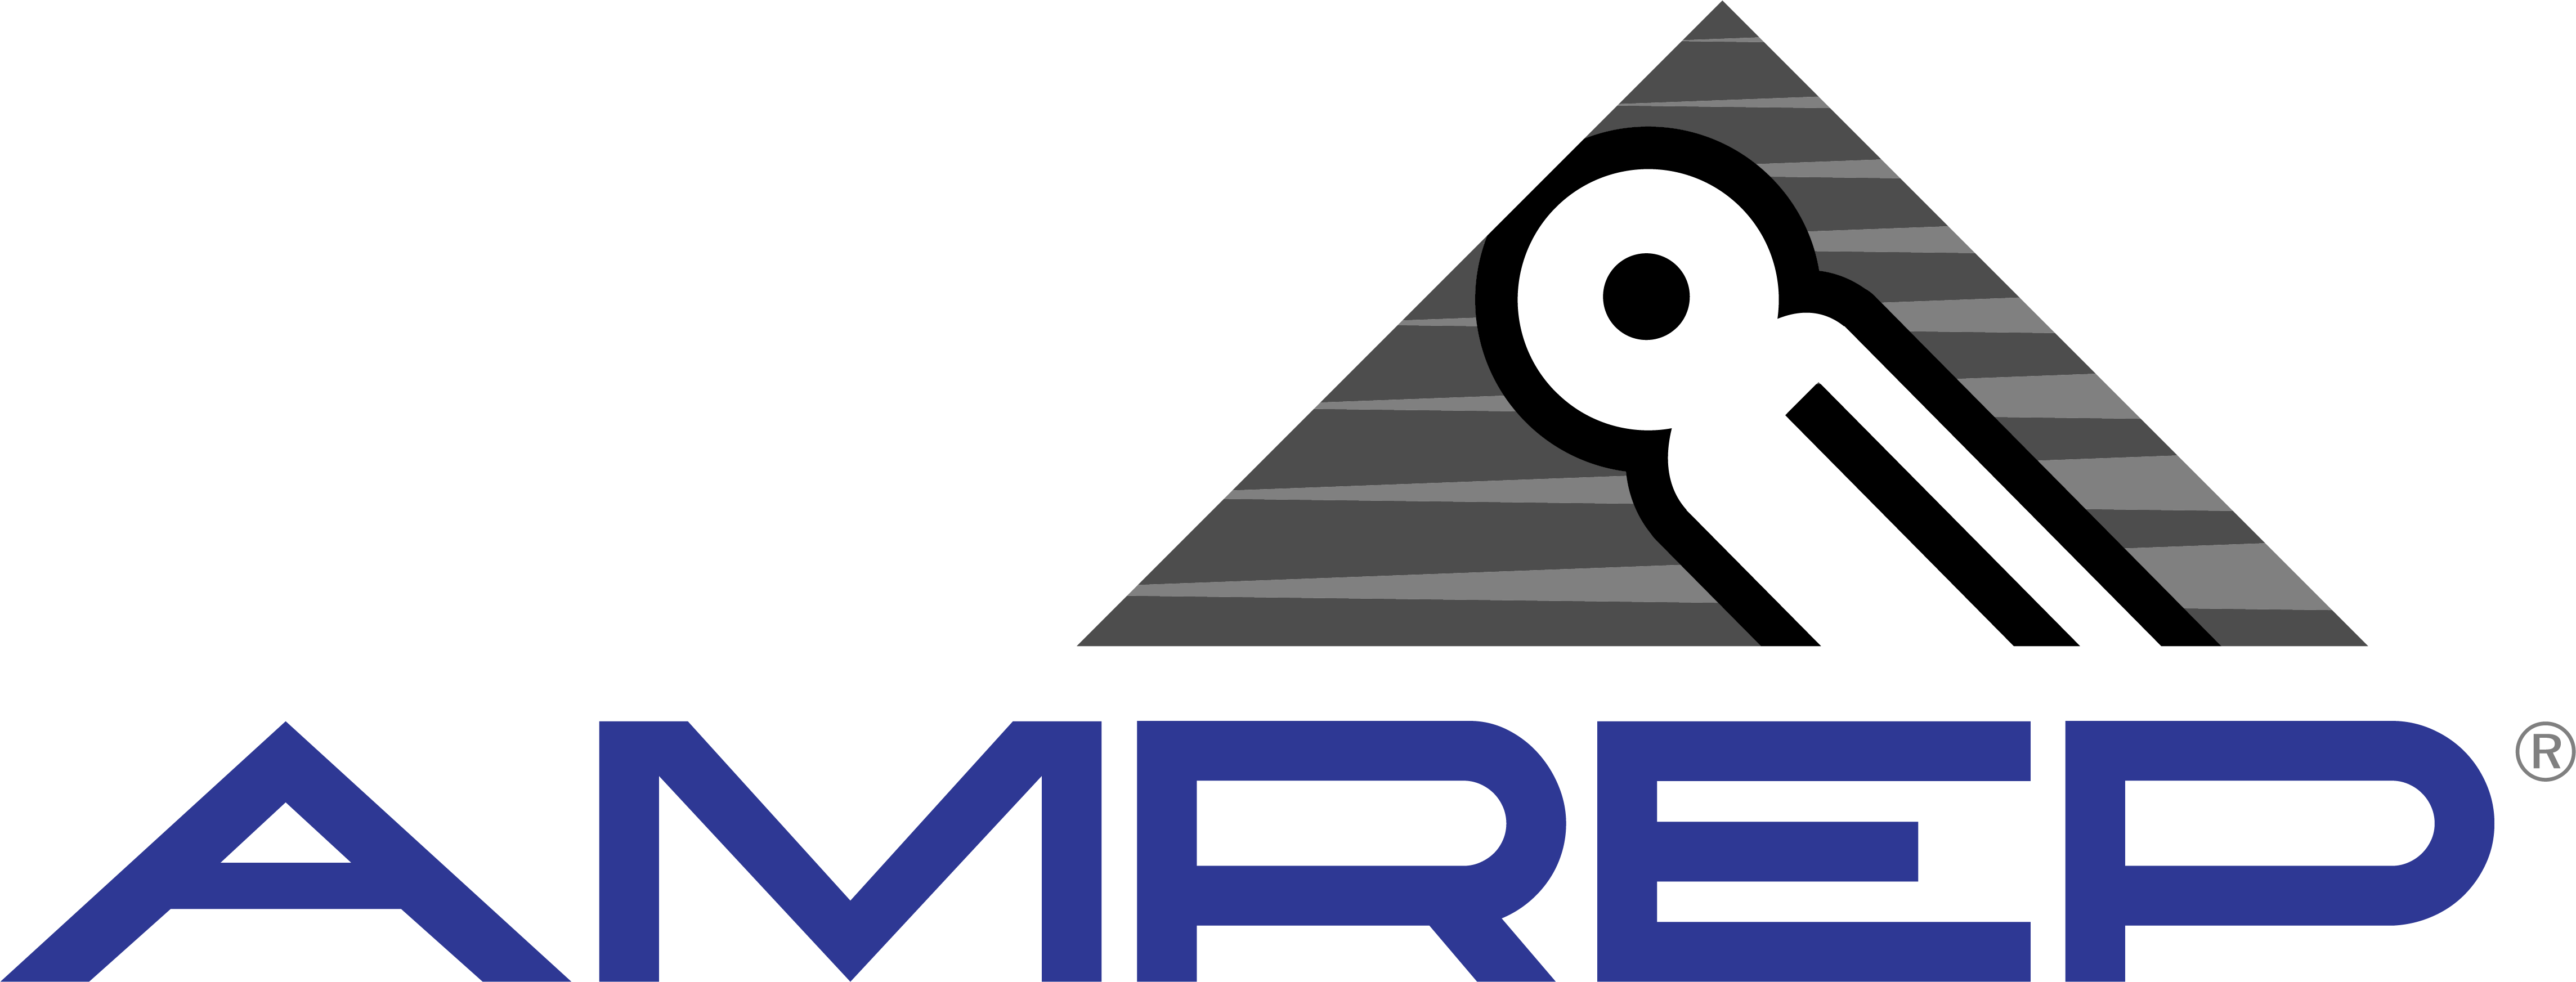 Amrep color logo